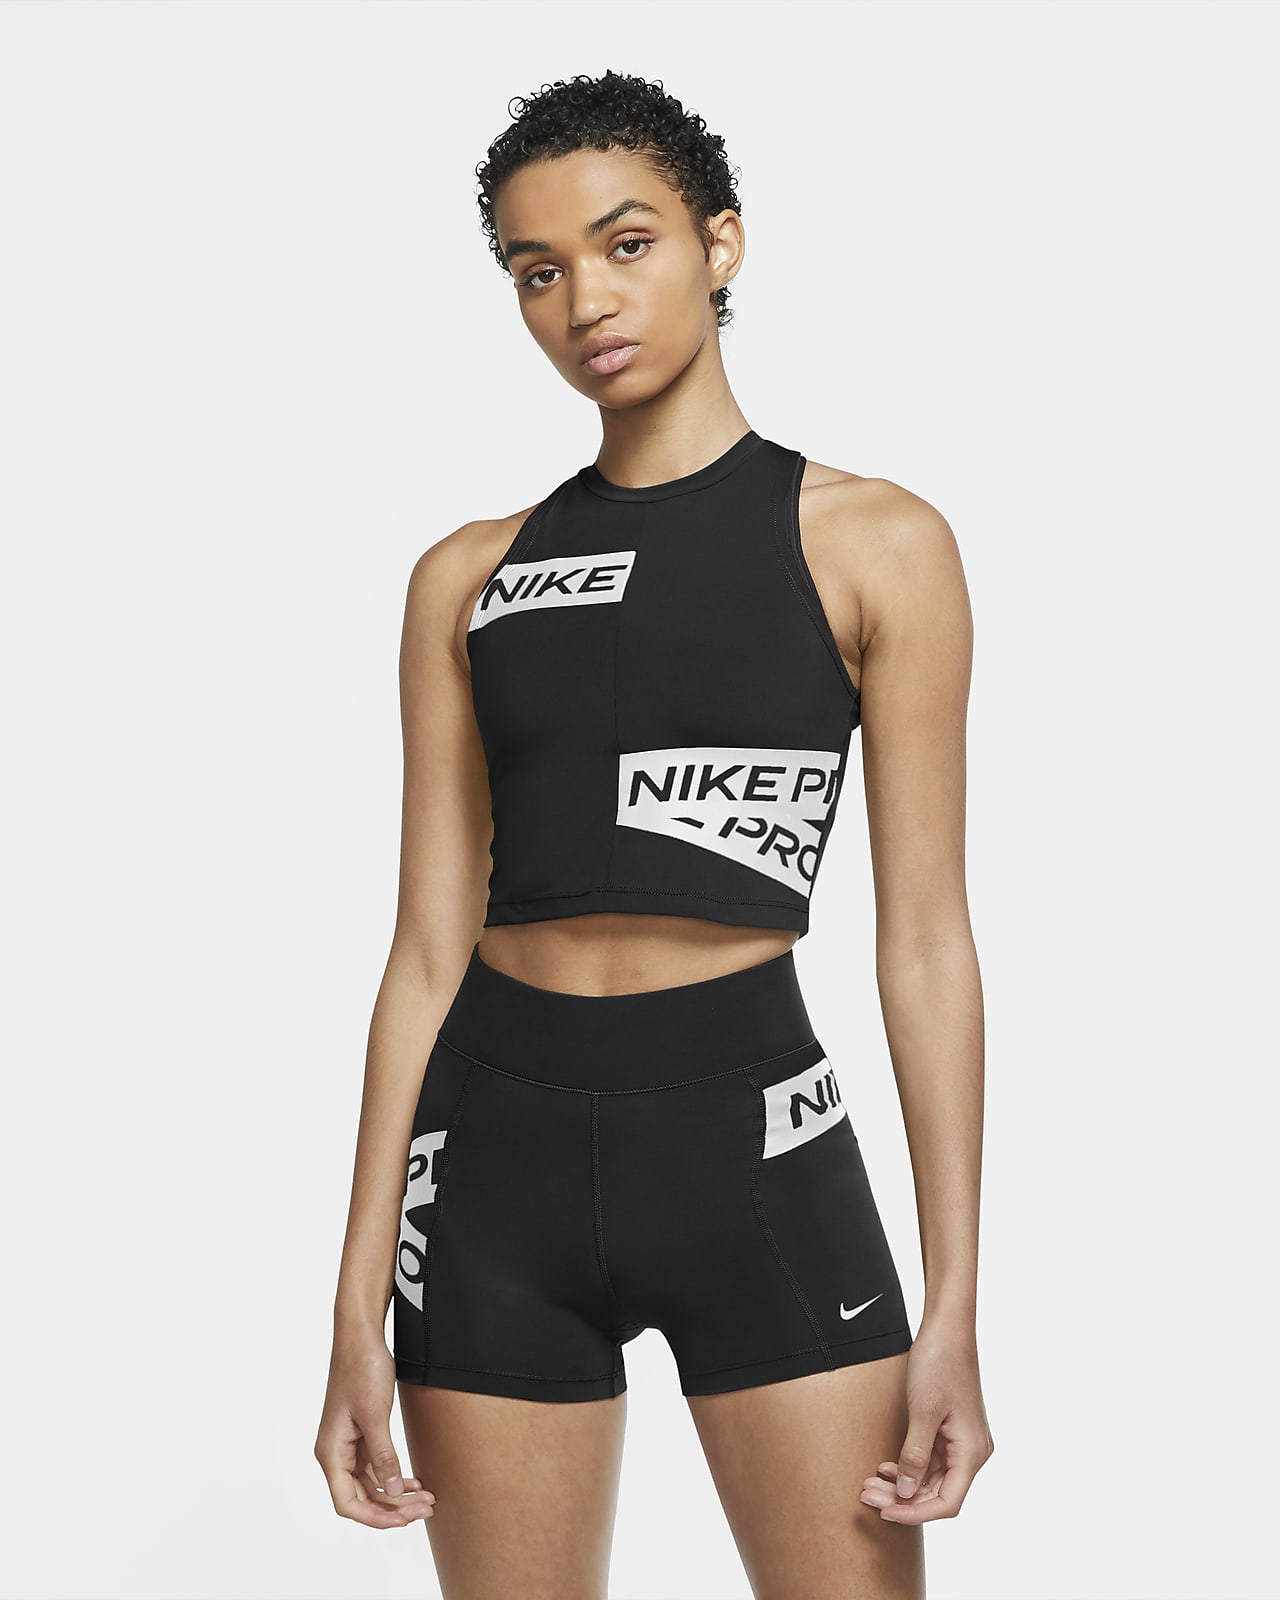 Nike Pro Women's Graphic Tank. Nike.com